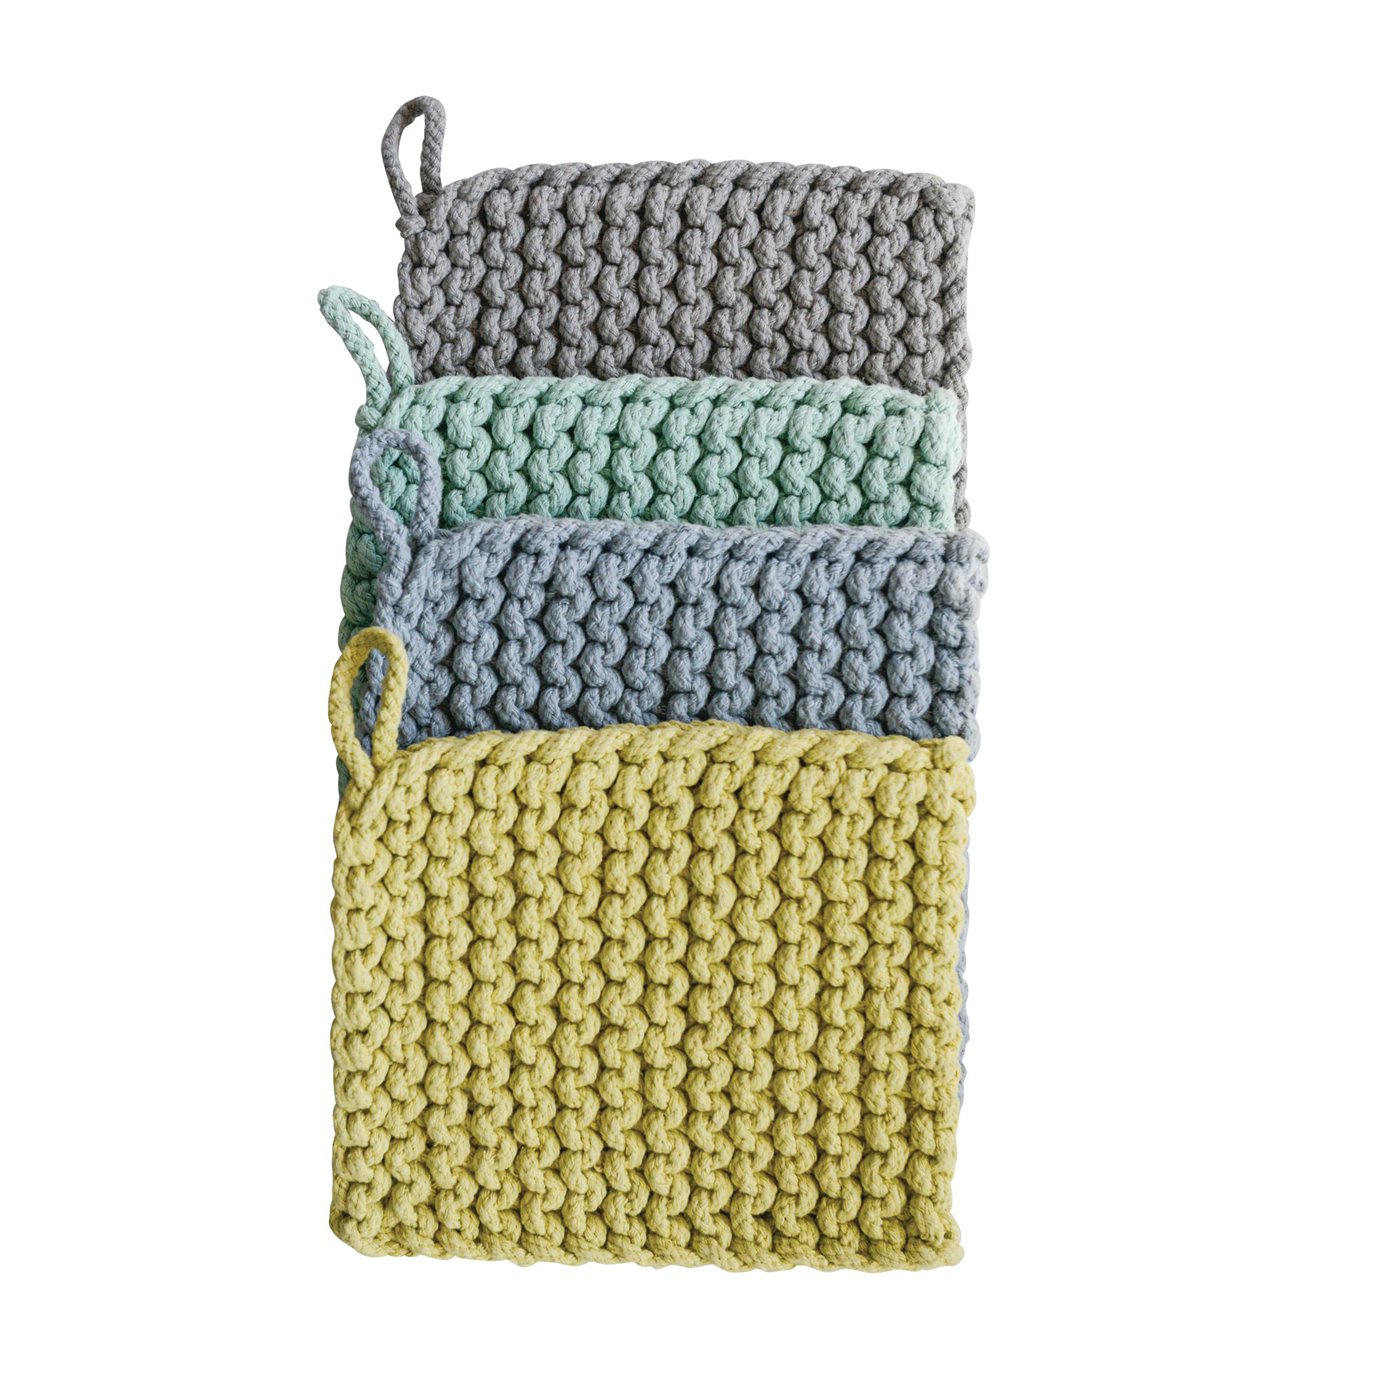 Cotton Crocheted Square Potholders (Set of 4 Colors)